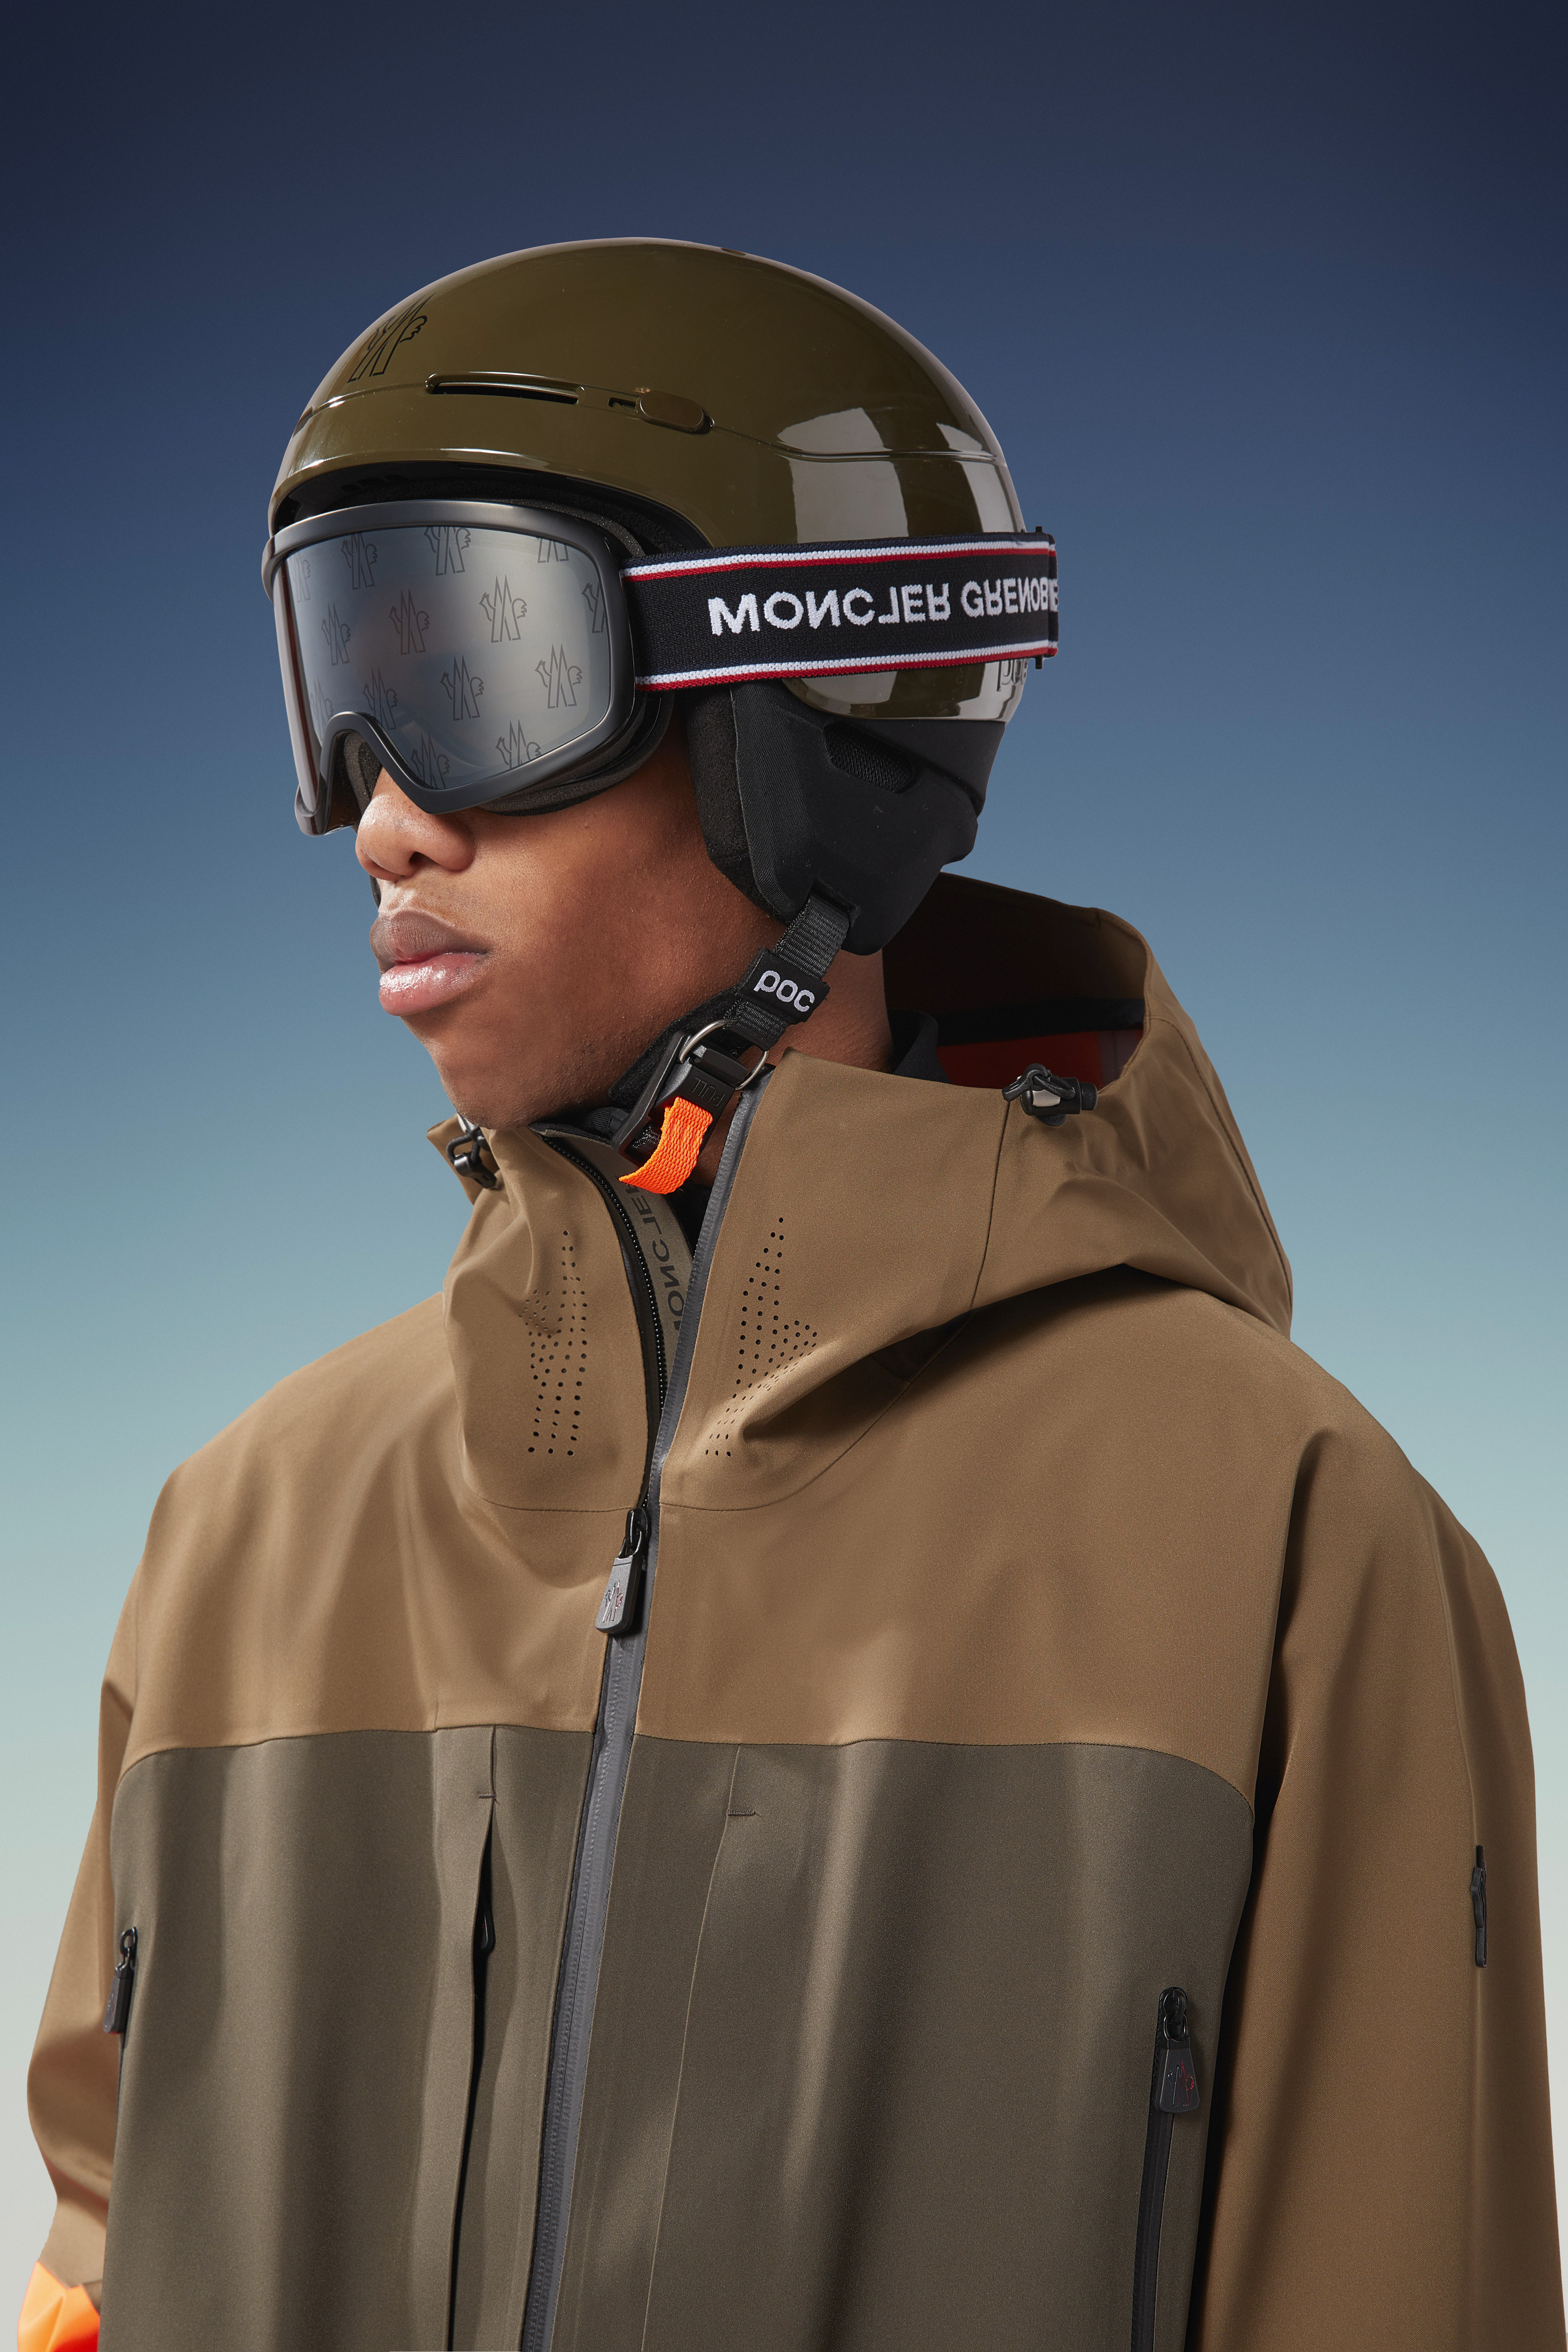 MONCLER - Ski Mask-Goggles 'ML0130' /Black w/ roviex mirror